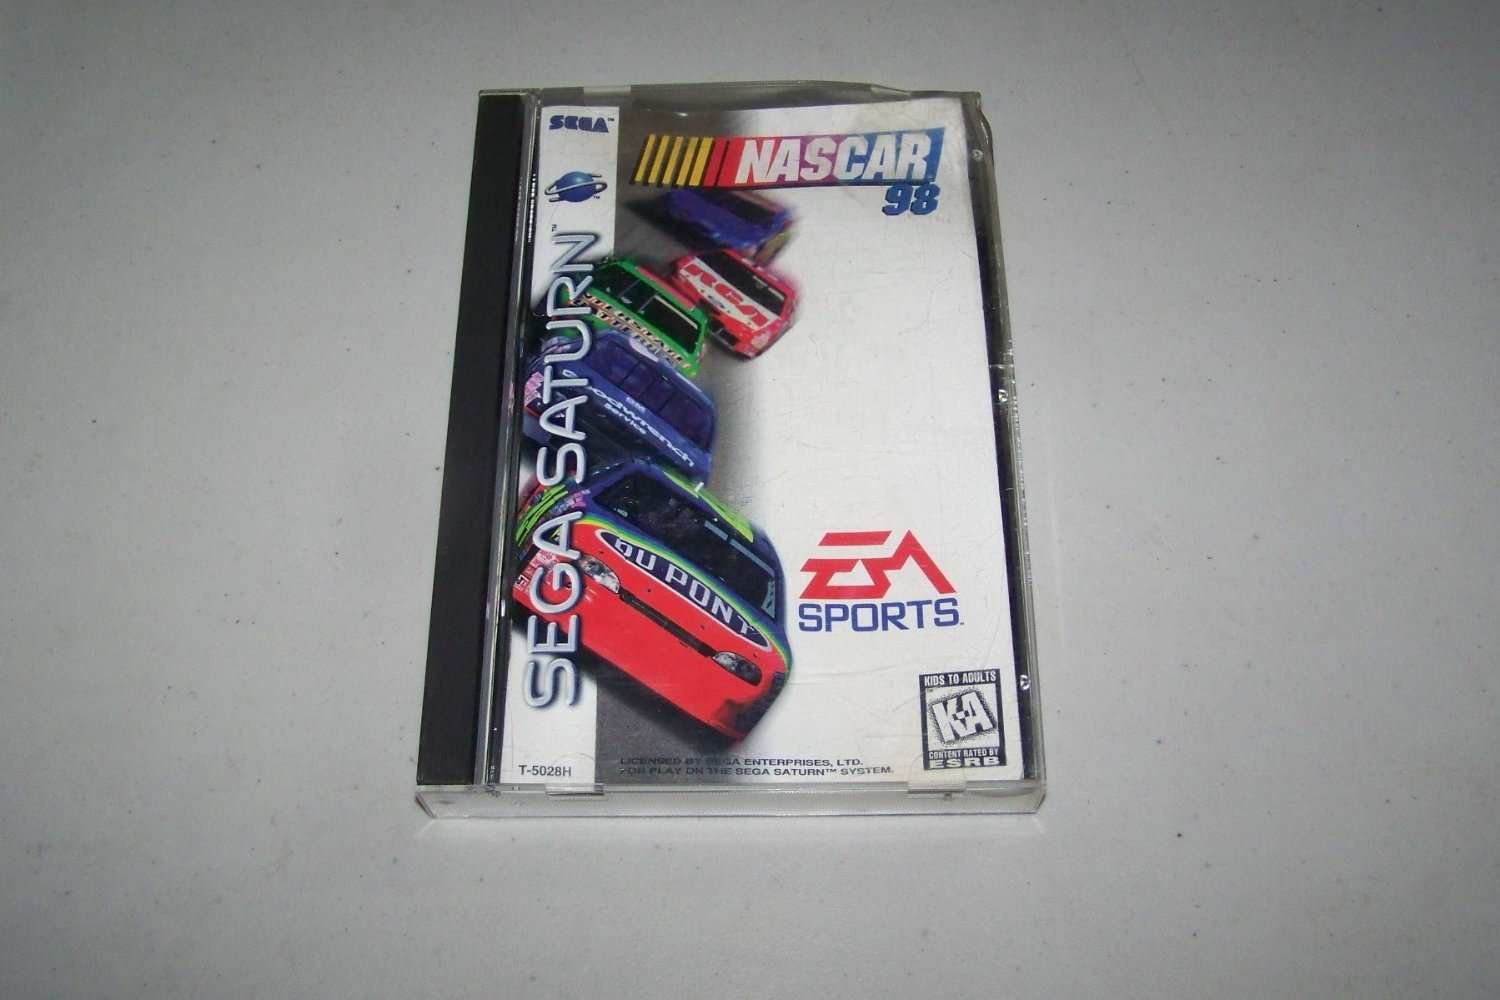 SAT: NASCAR 98 (GAME)